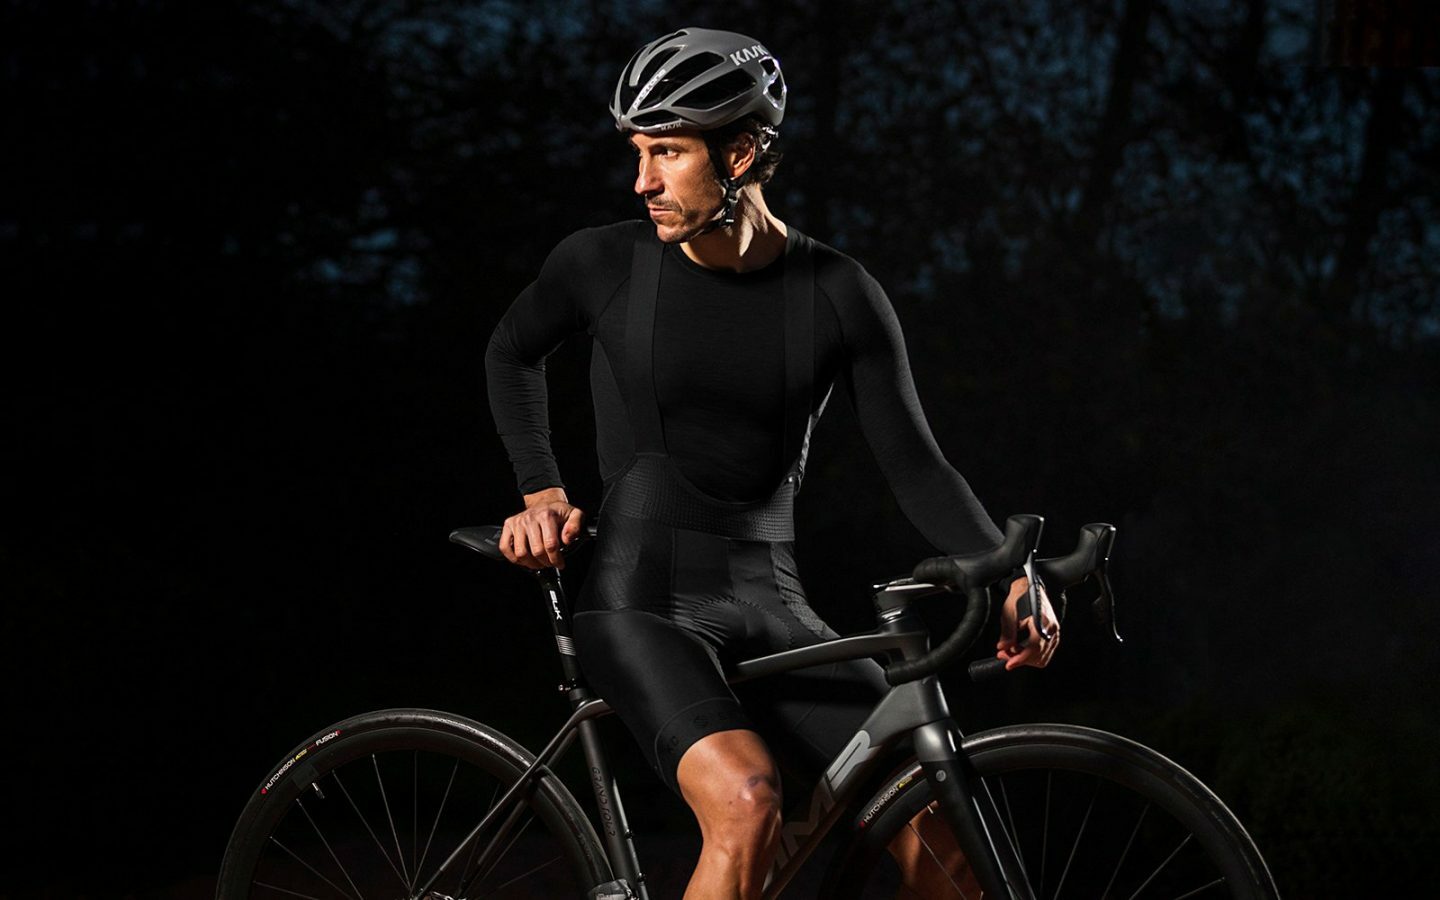 Merino Long Sleeve Base Layer Black: Men's Cycling Clothing